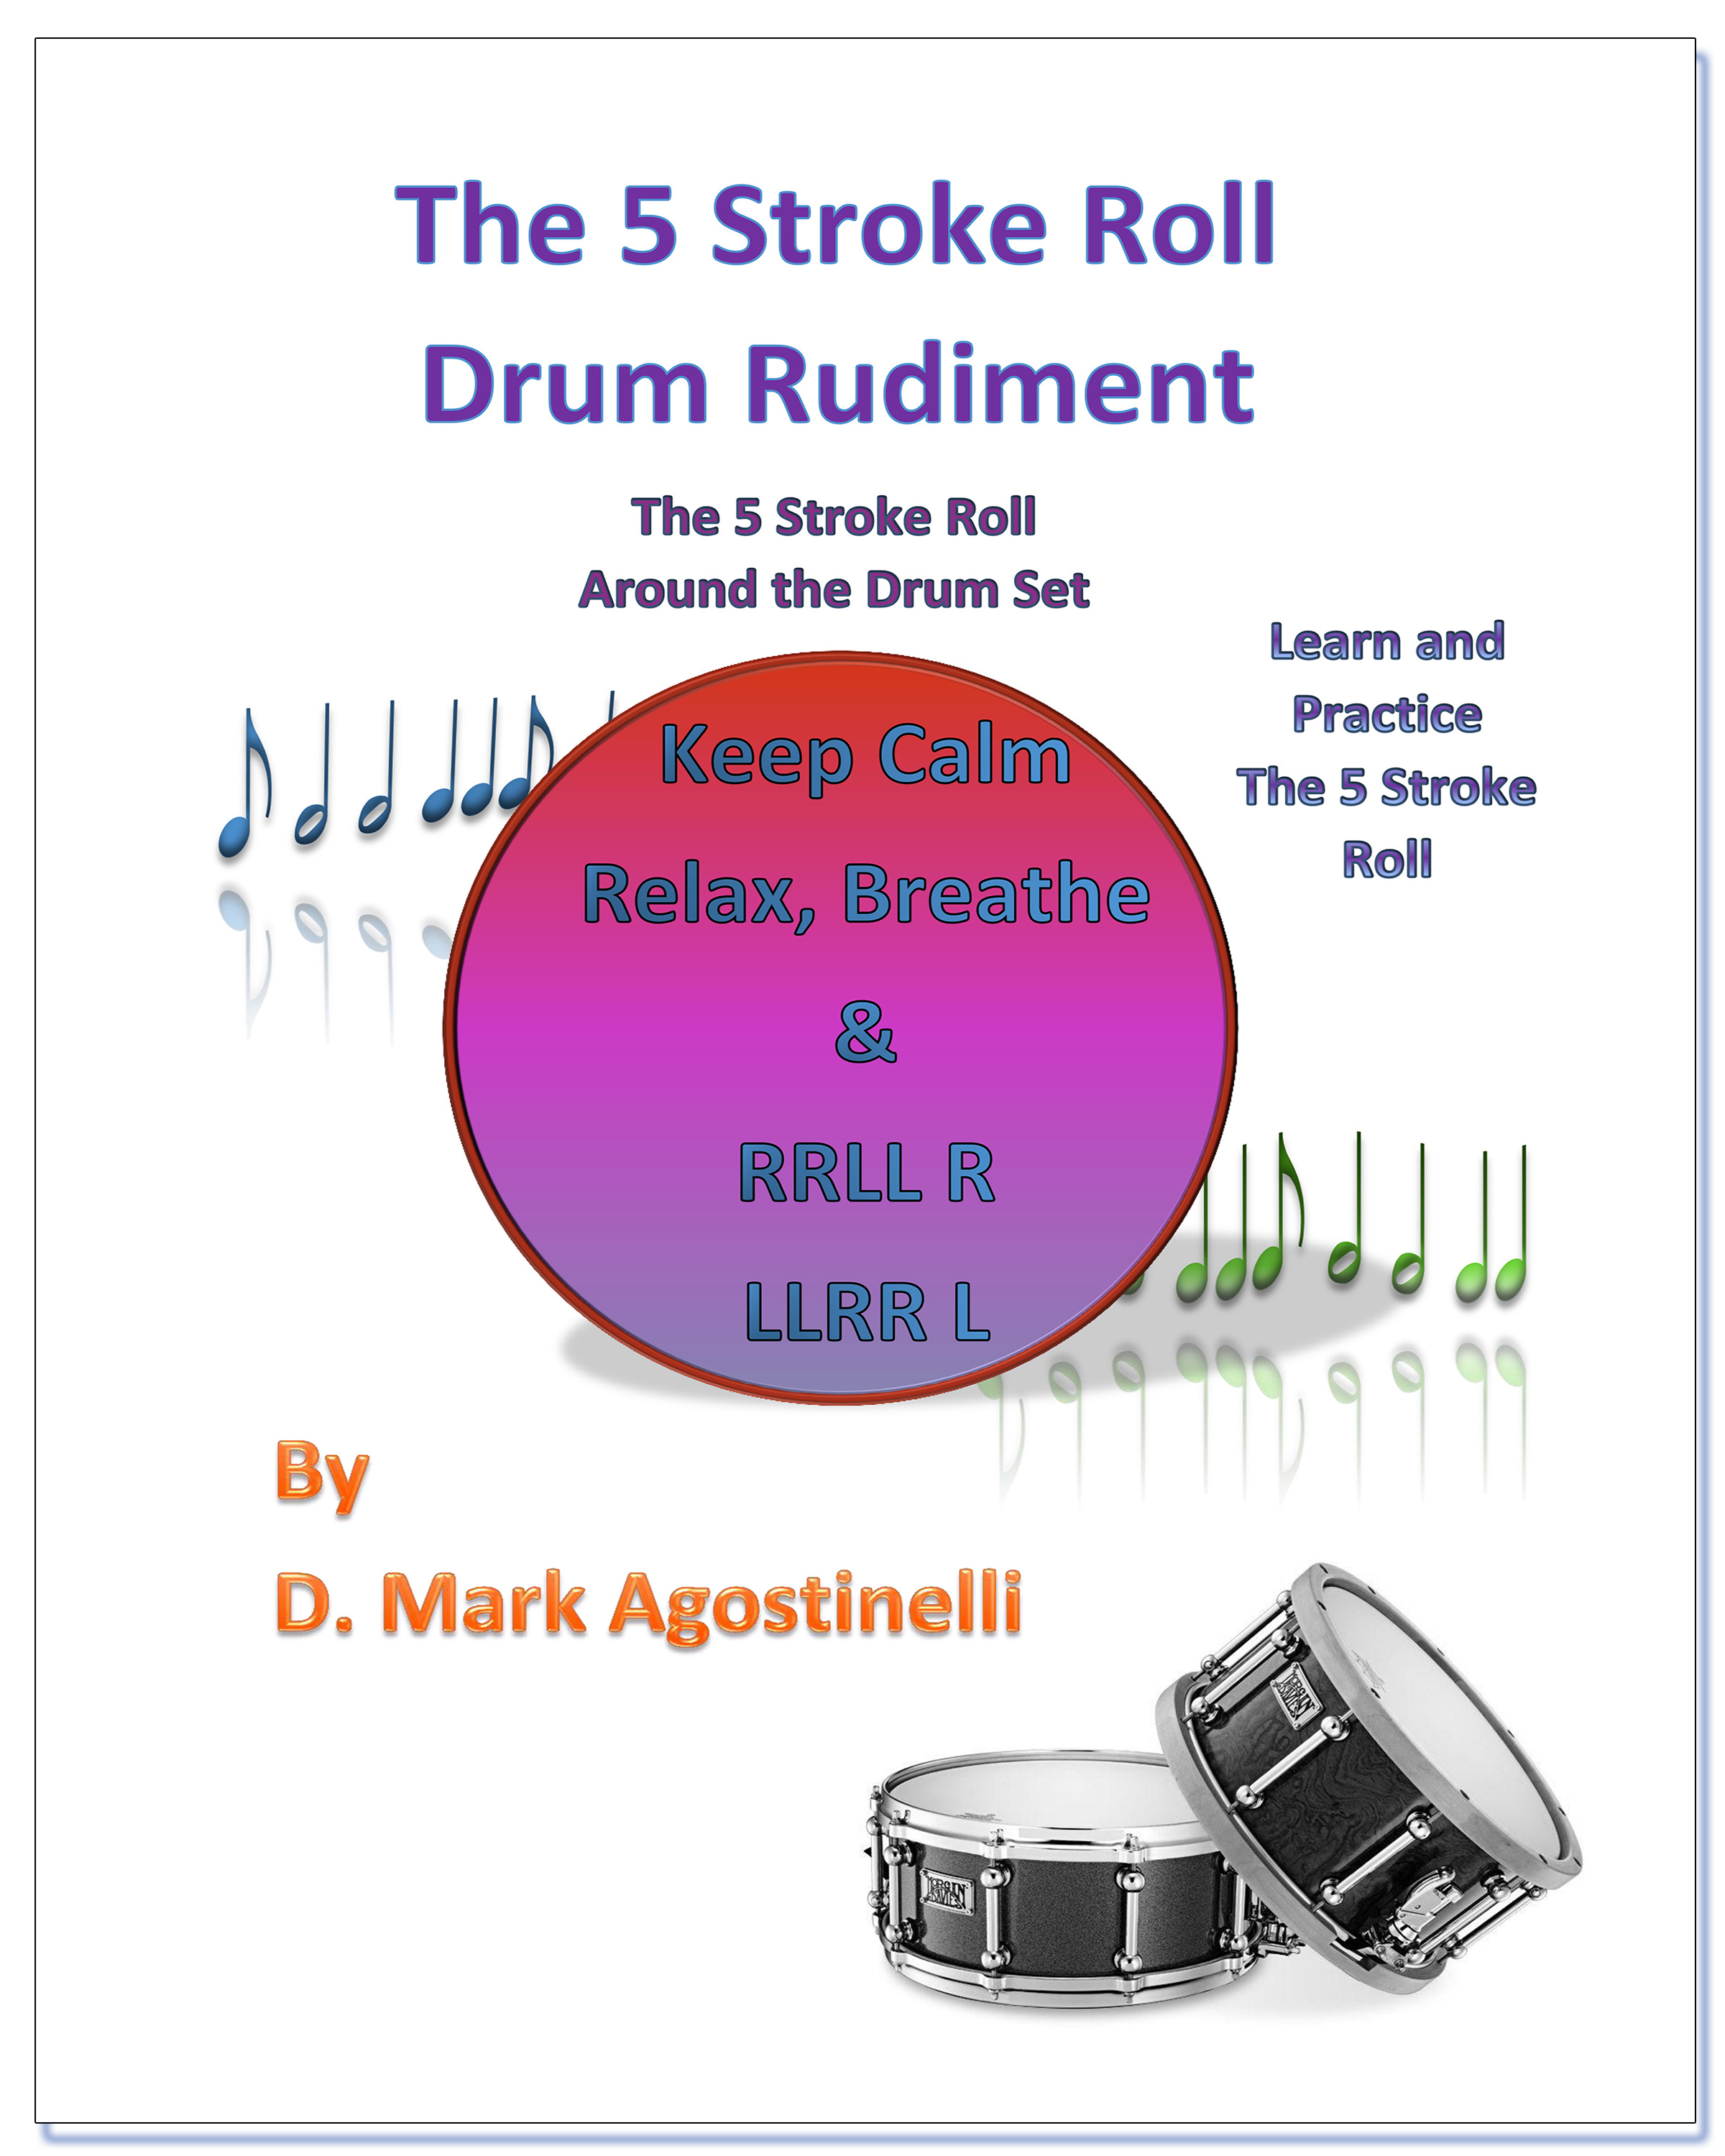 The 5 Stroke Roll Drum Rudiment